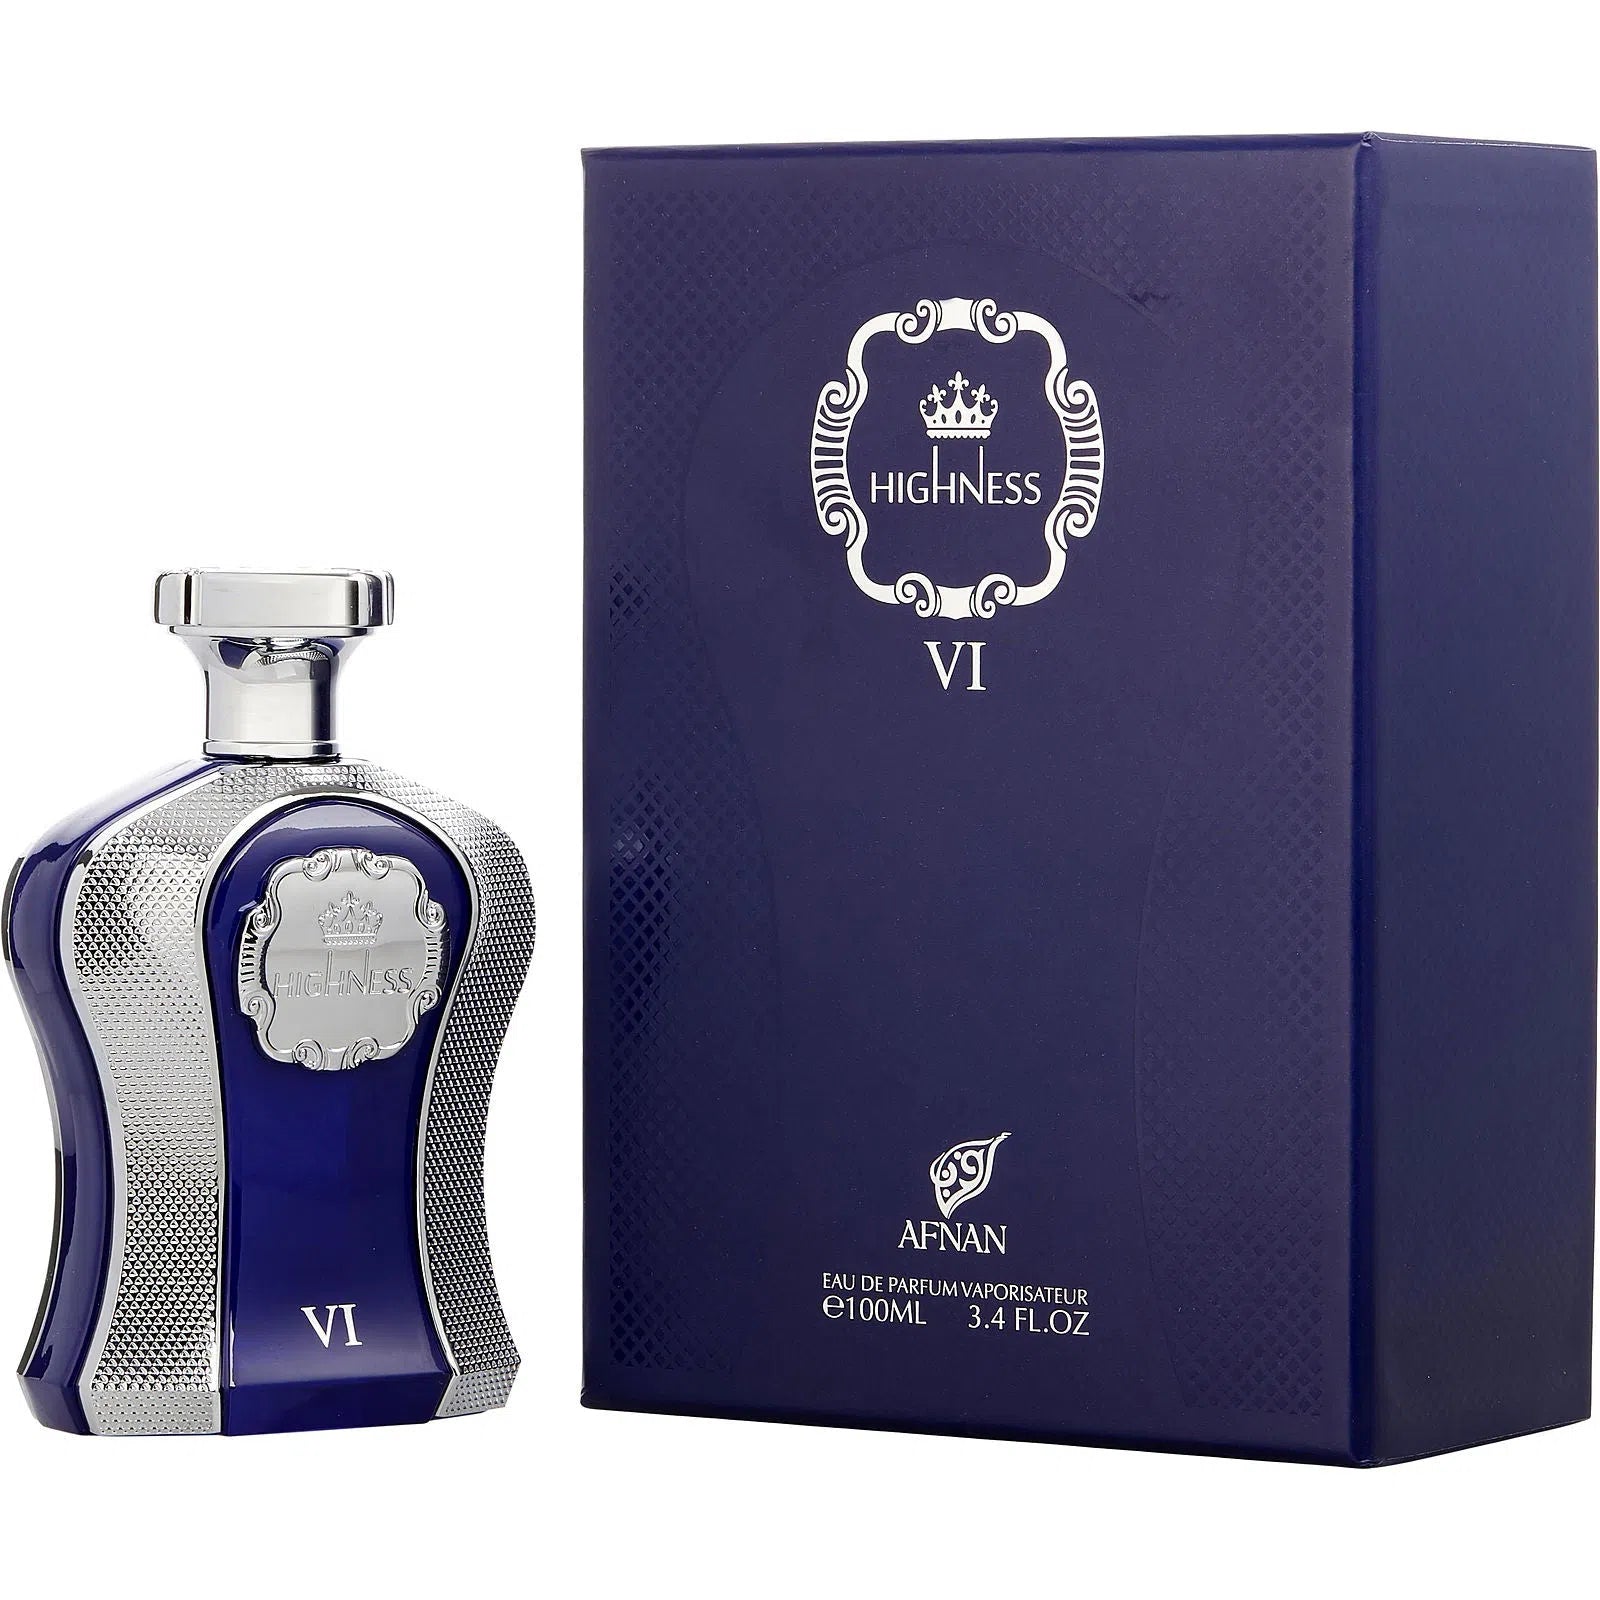 Perfume Afnan His Highness VI Blue EDP (M) / 100 ml - 6290171070153- Prive Perfumes Honduras